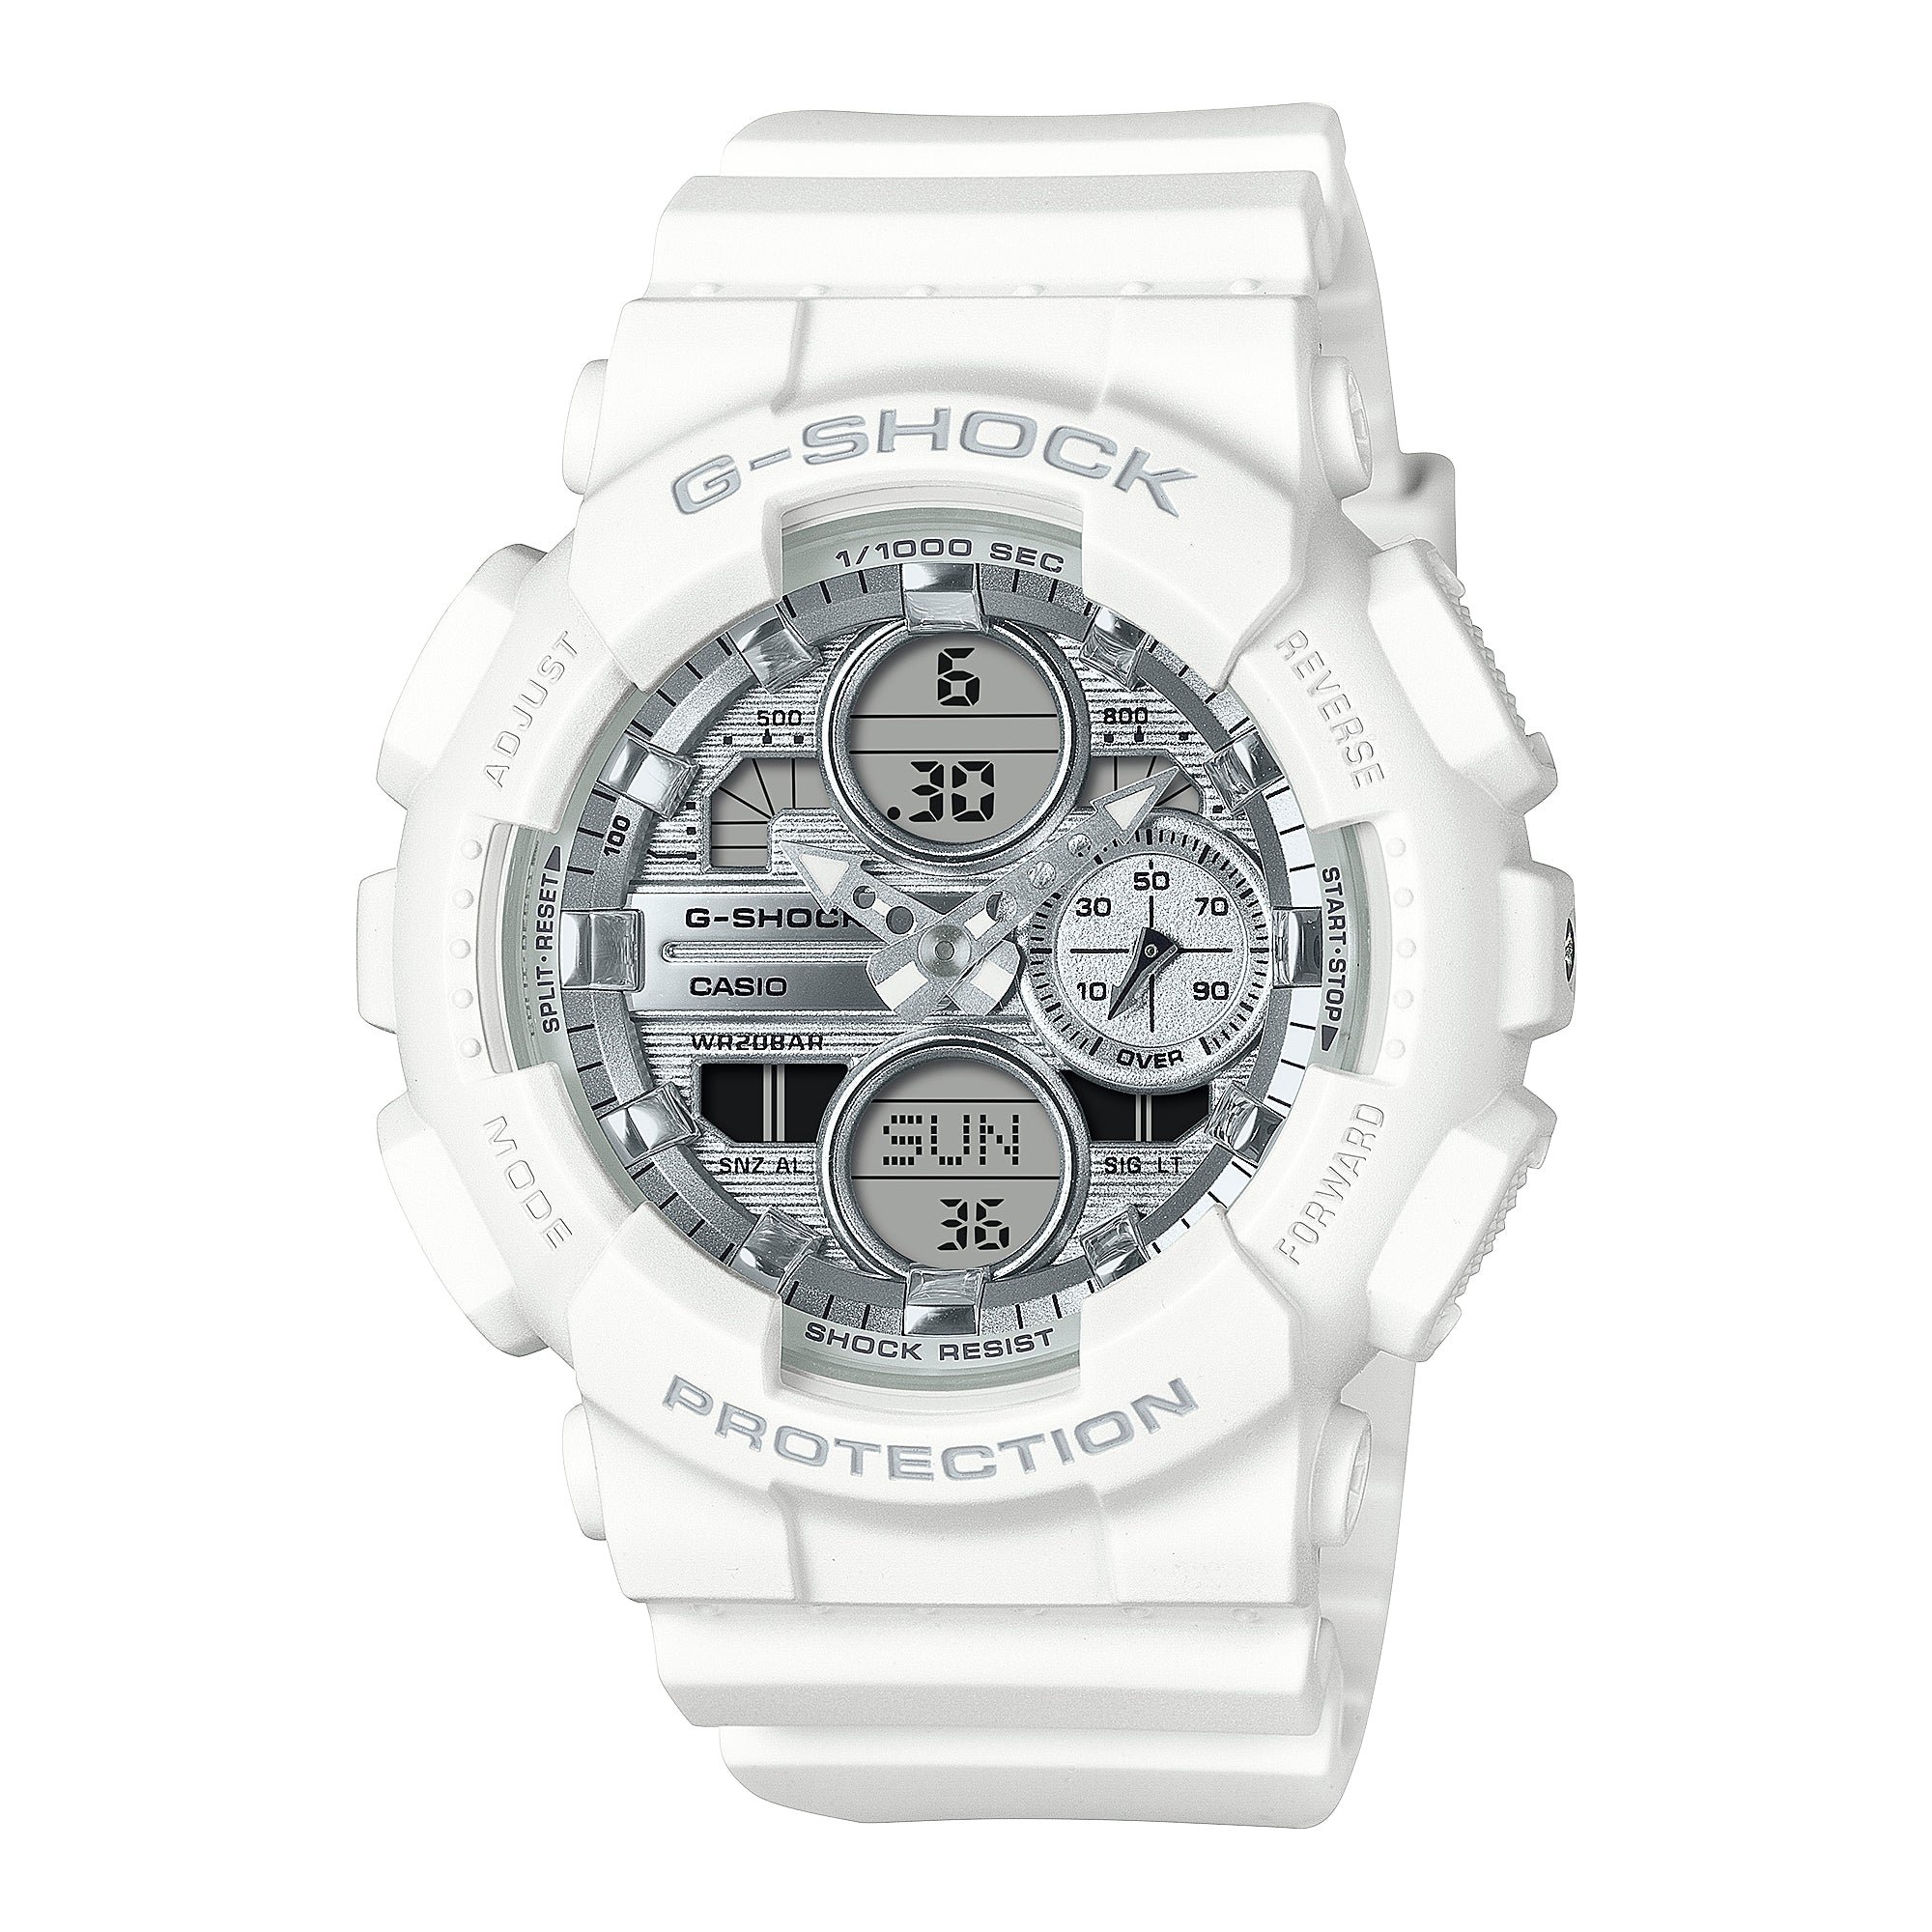 Casio G-Shock for Ladies' GA-140 Lineup Bio-Based Watch GMAS140VA-7A GMA-S140VA-7A